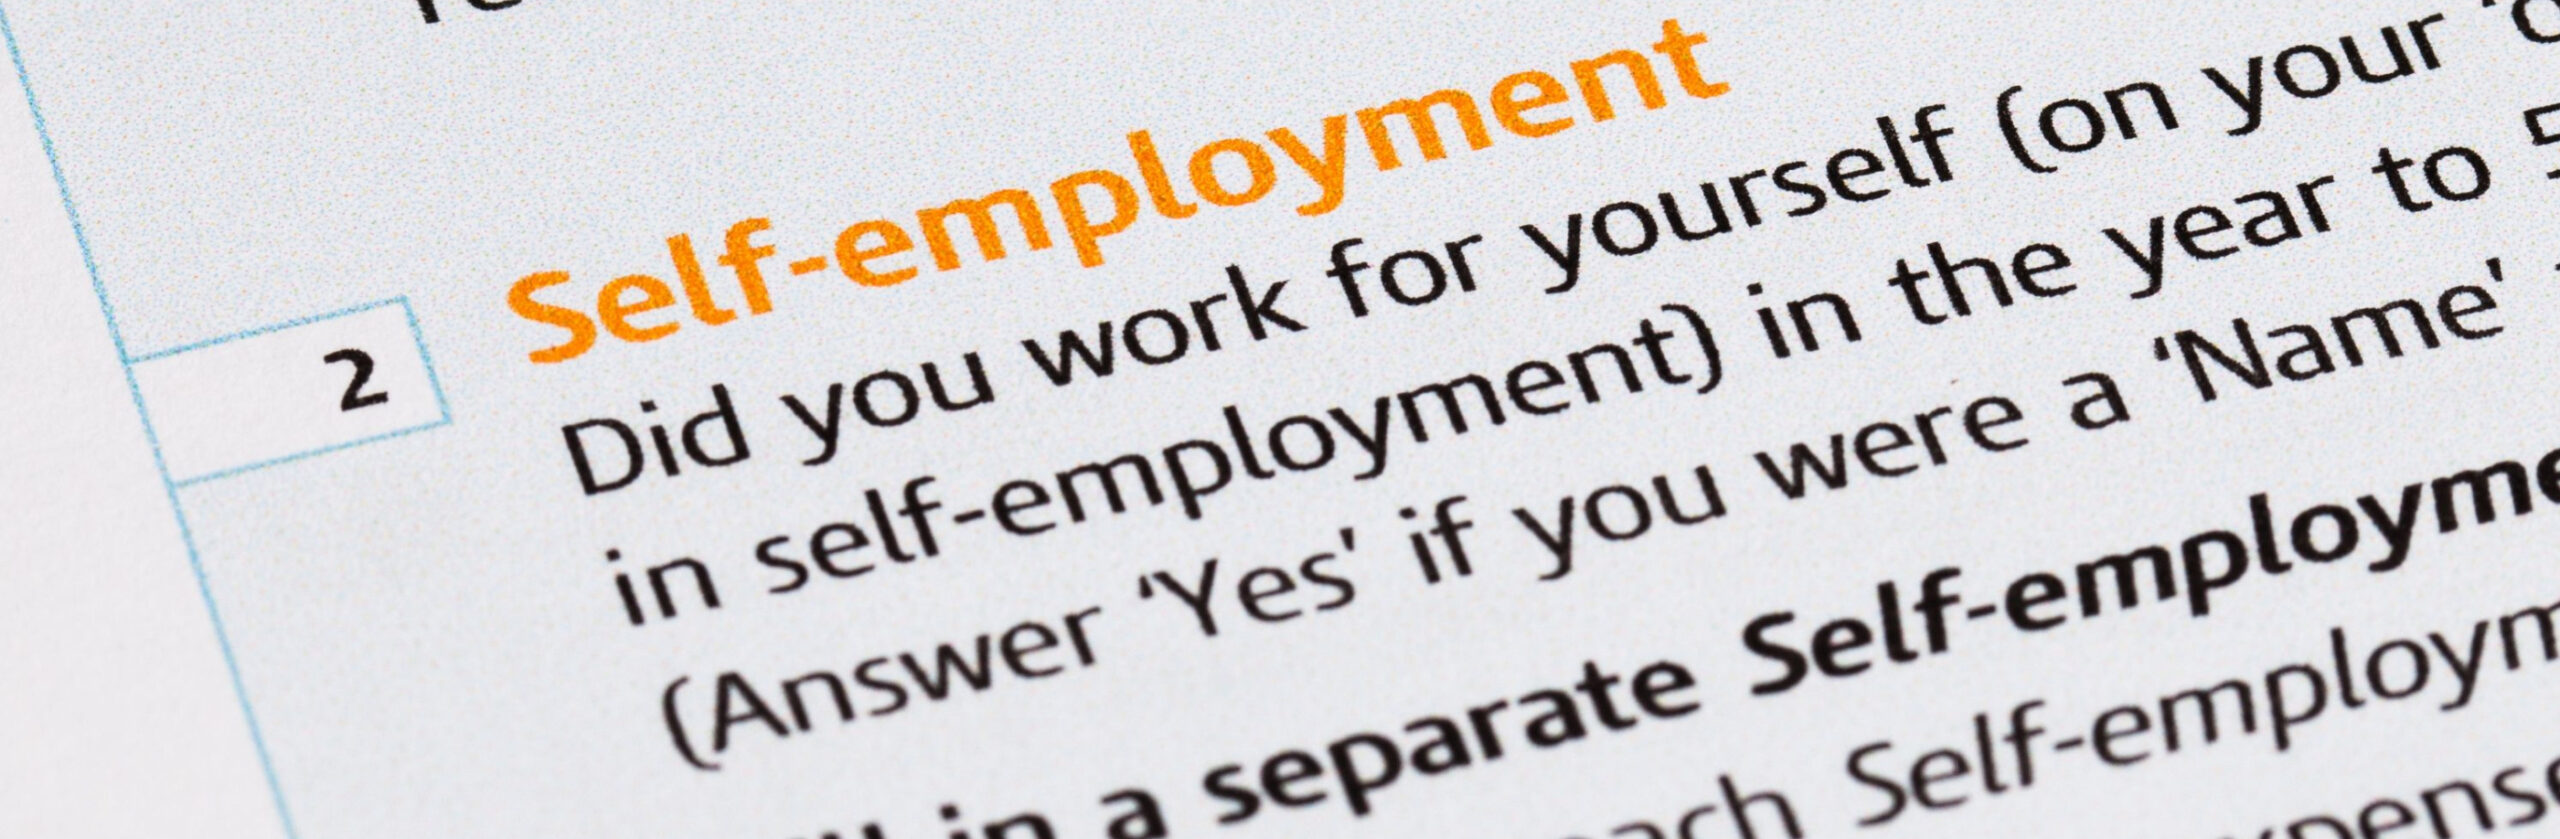 Self-Employed Retirement Plans Swansea, IL | Financial Advisors | Retirement Consultants Near Swansea